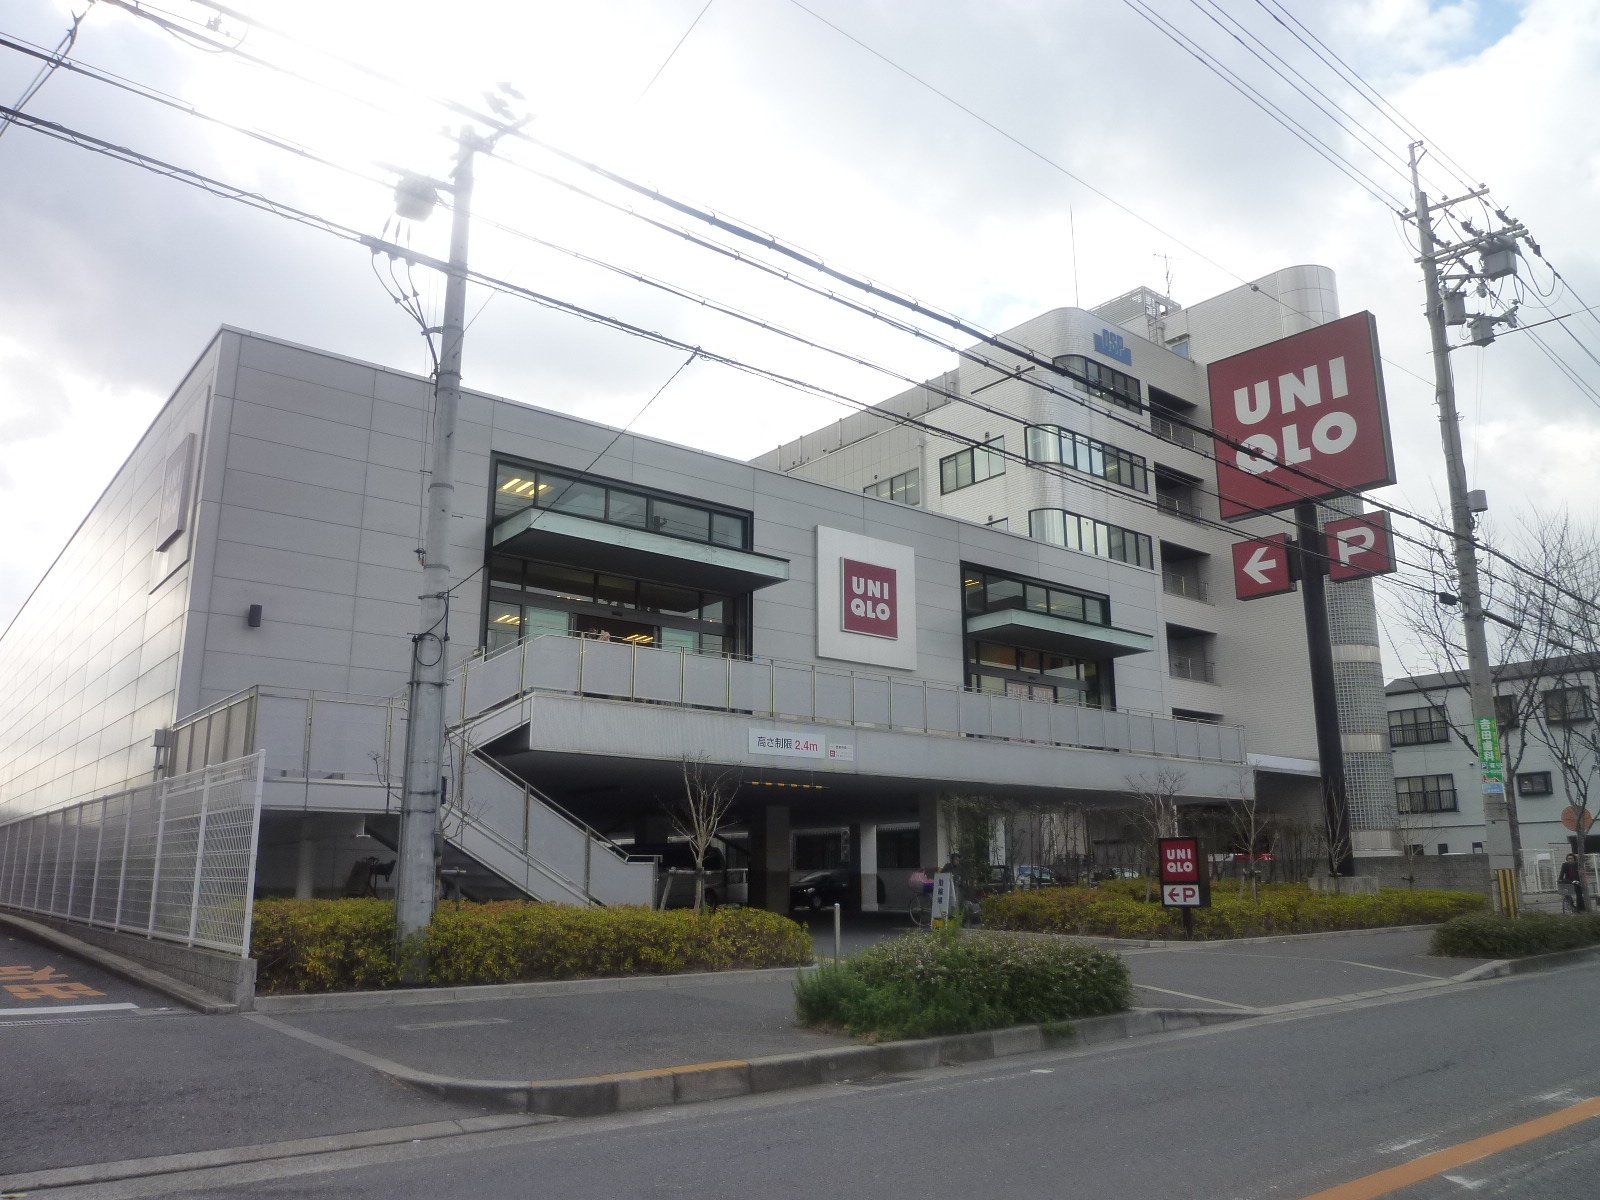 Shopping centre. 696m to UNIQLO Yao Aoyama (shopping center)